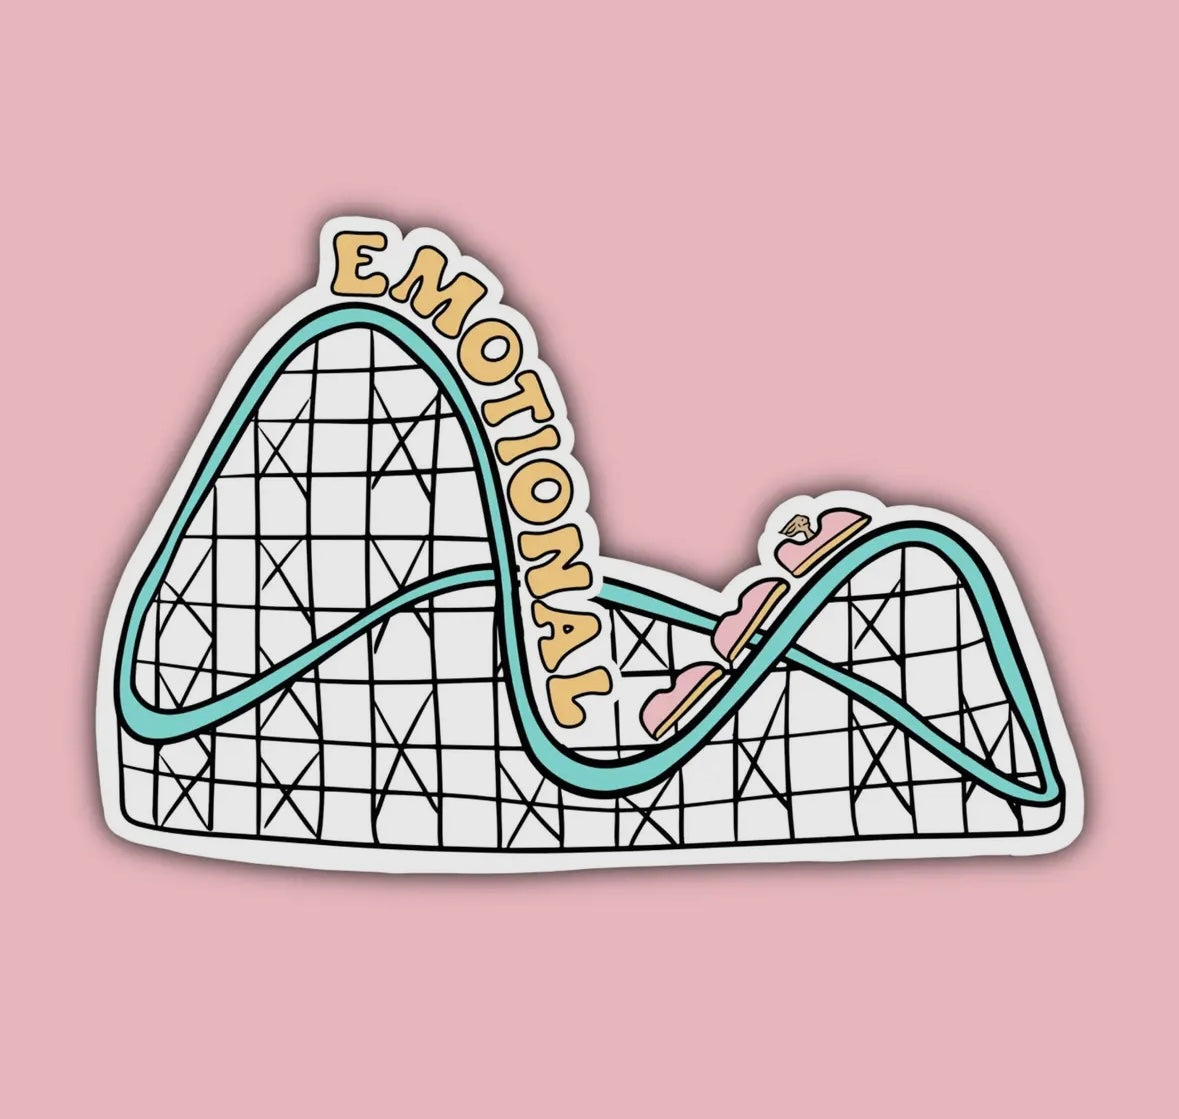 Emotional rollercoaster sticker